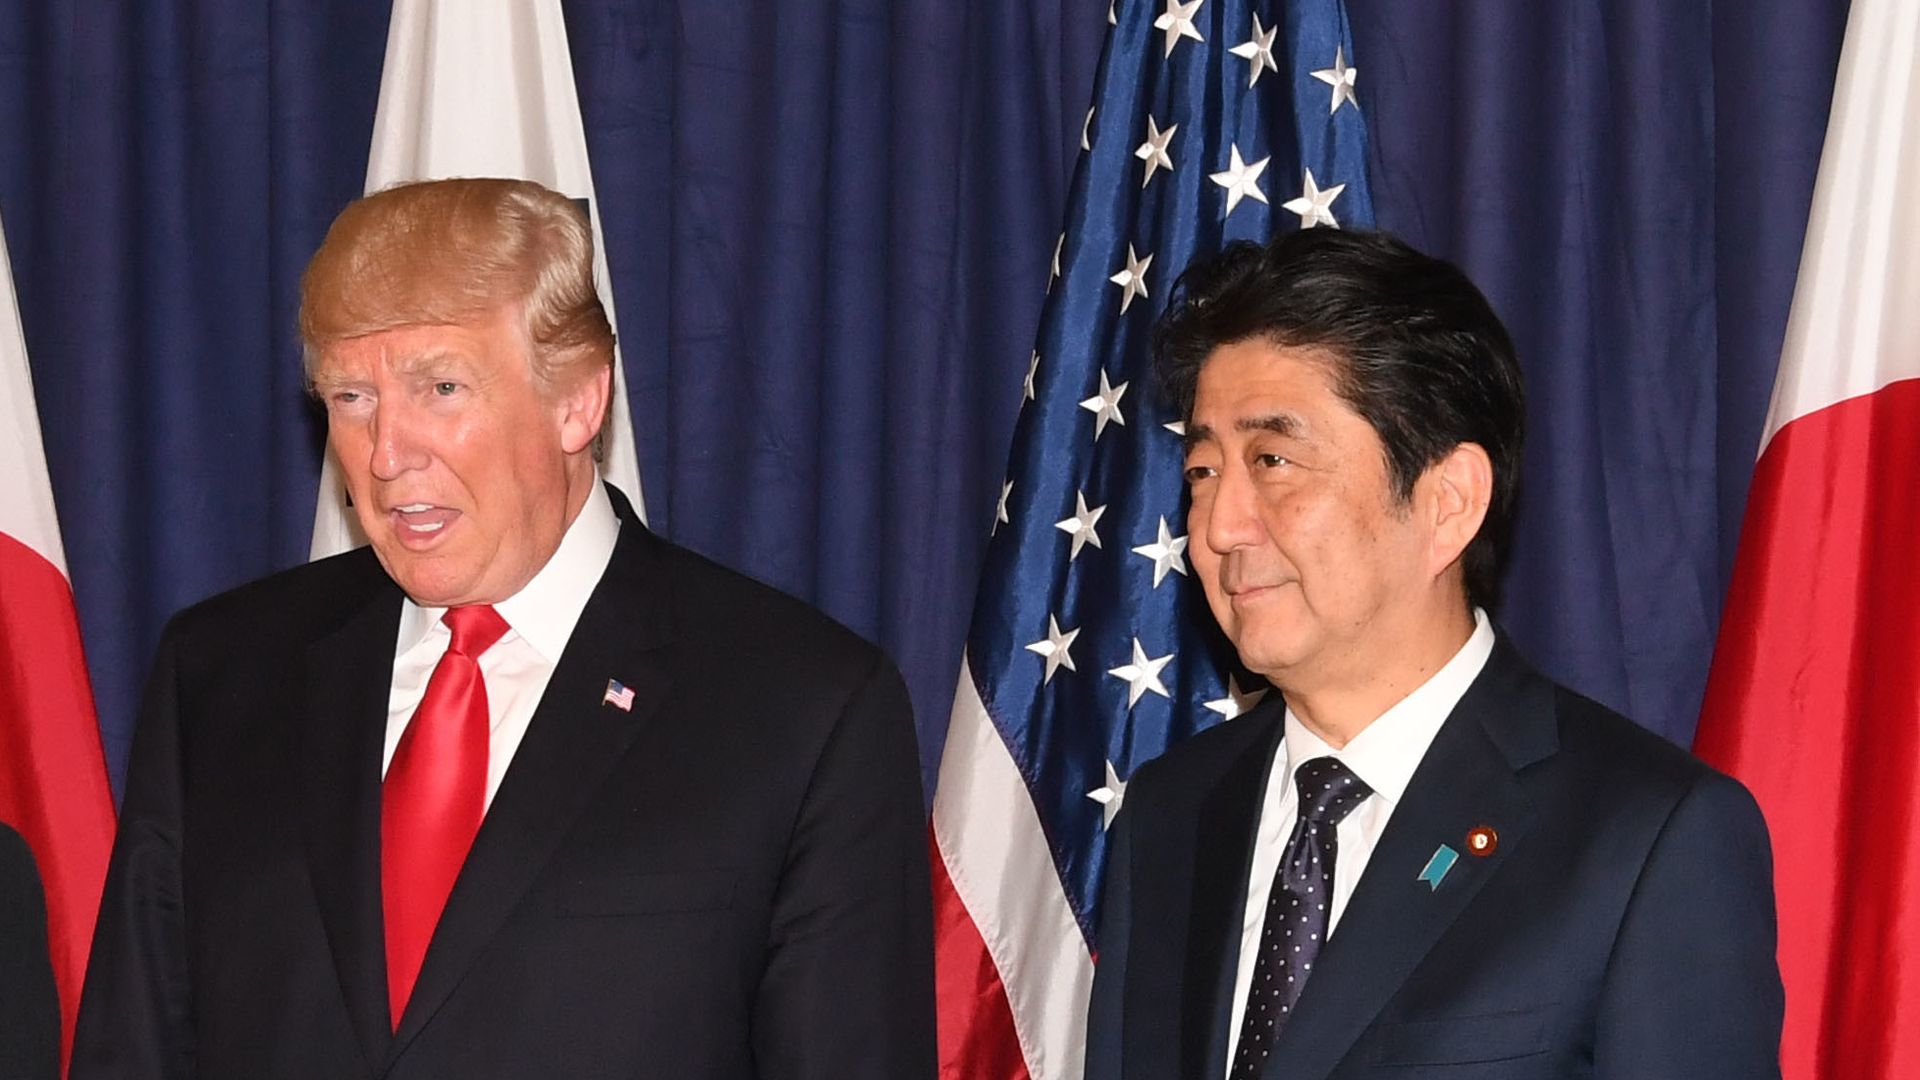 Trump stands next to Abe at the G20 Summit in Hamburg